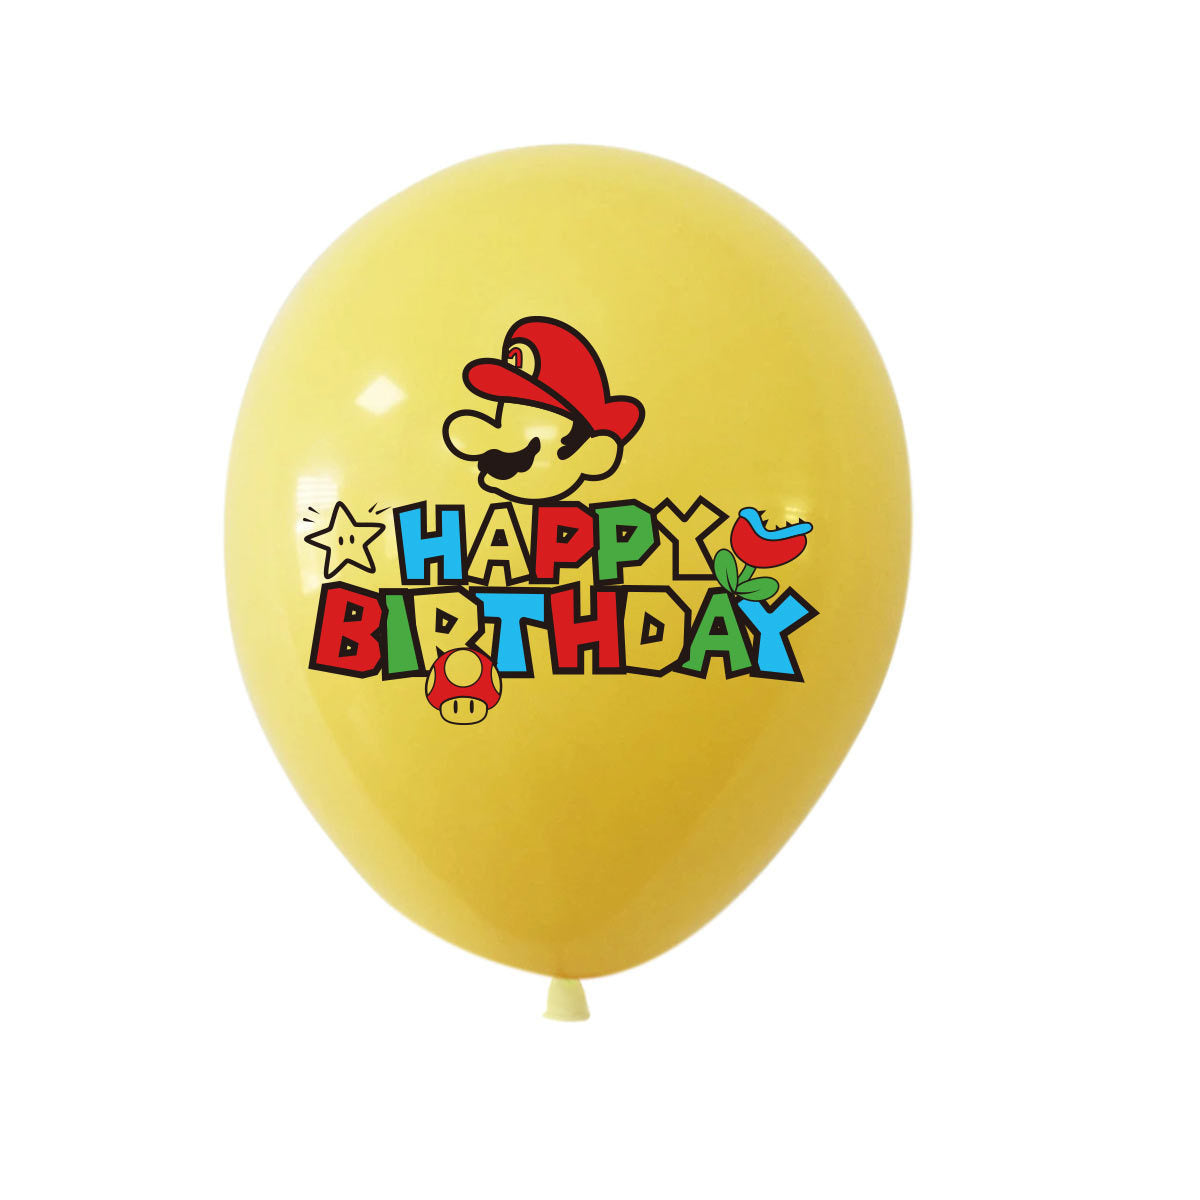 Super Mario Theme Balloons Deco Pack